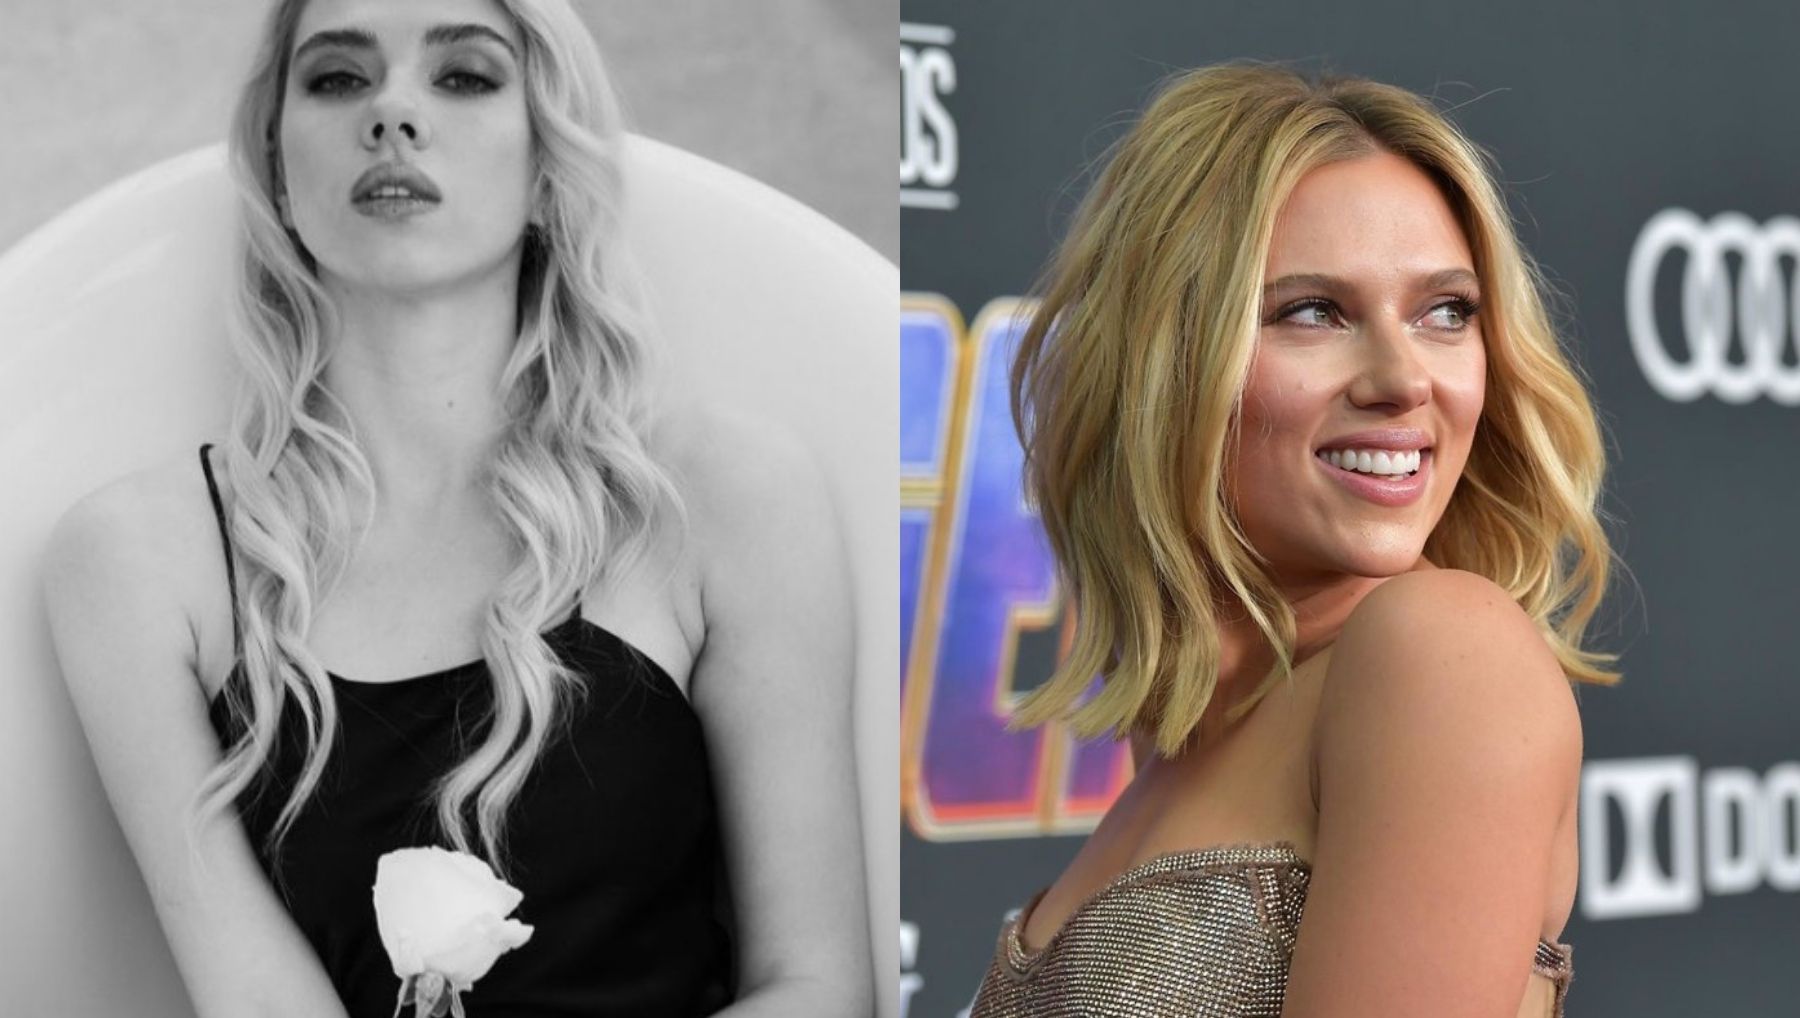 Kate y Scarlett Johansson, gemelas en TikTok